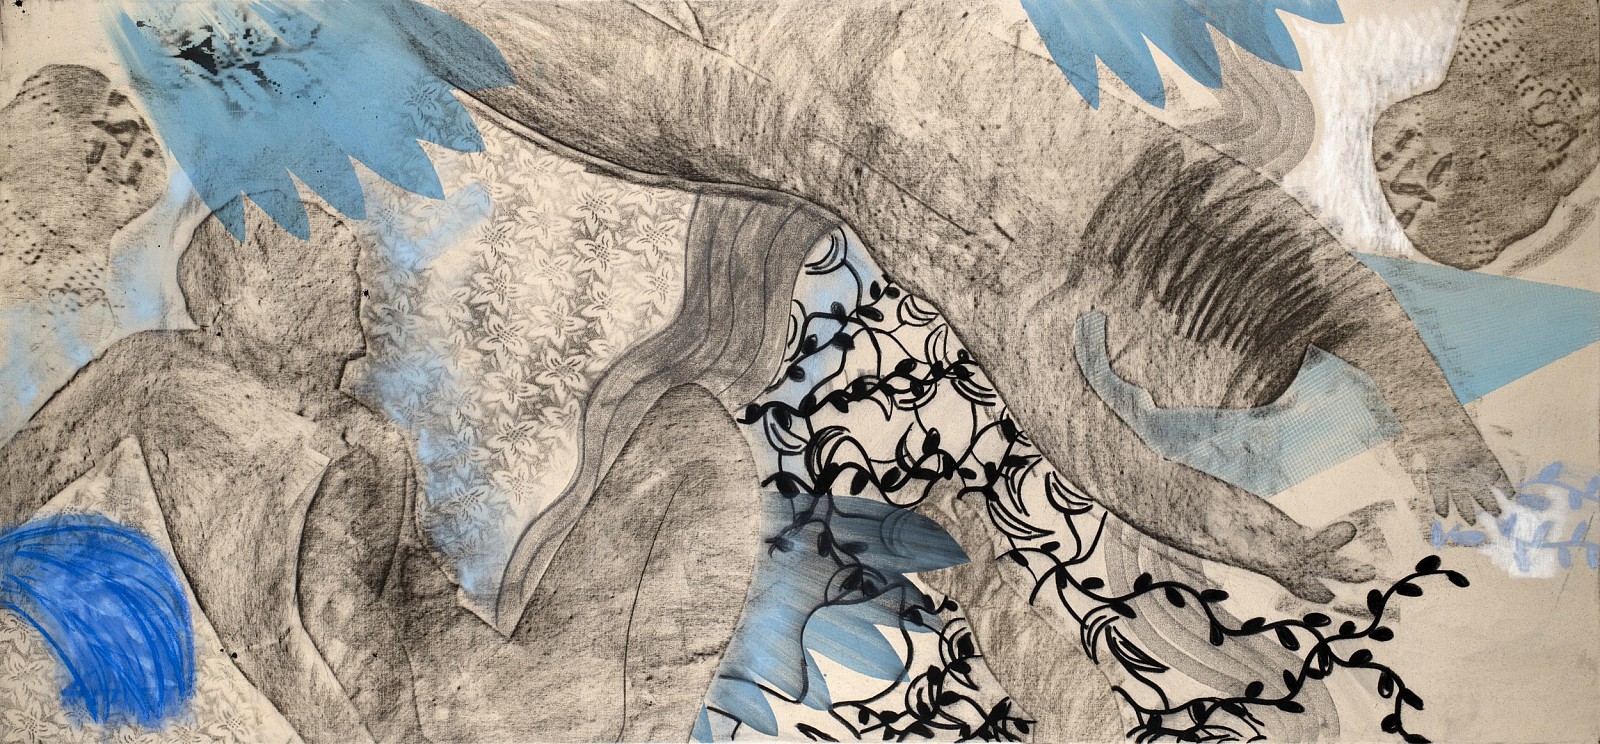 Sara Benninga, Swimmers 1
2023, Charcoal, dry pastel, graphite, acrylic on canvas